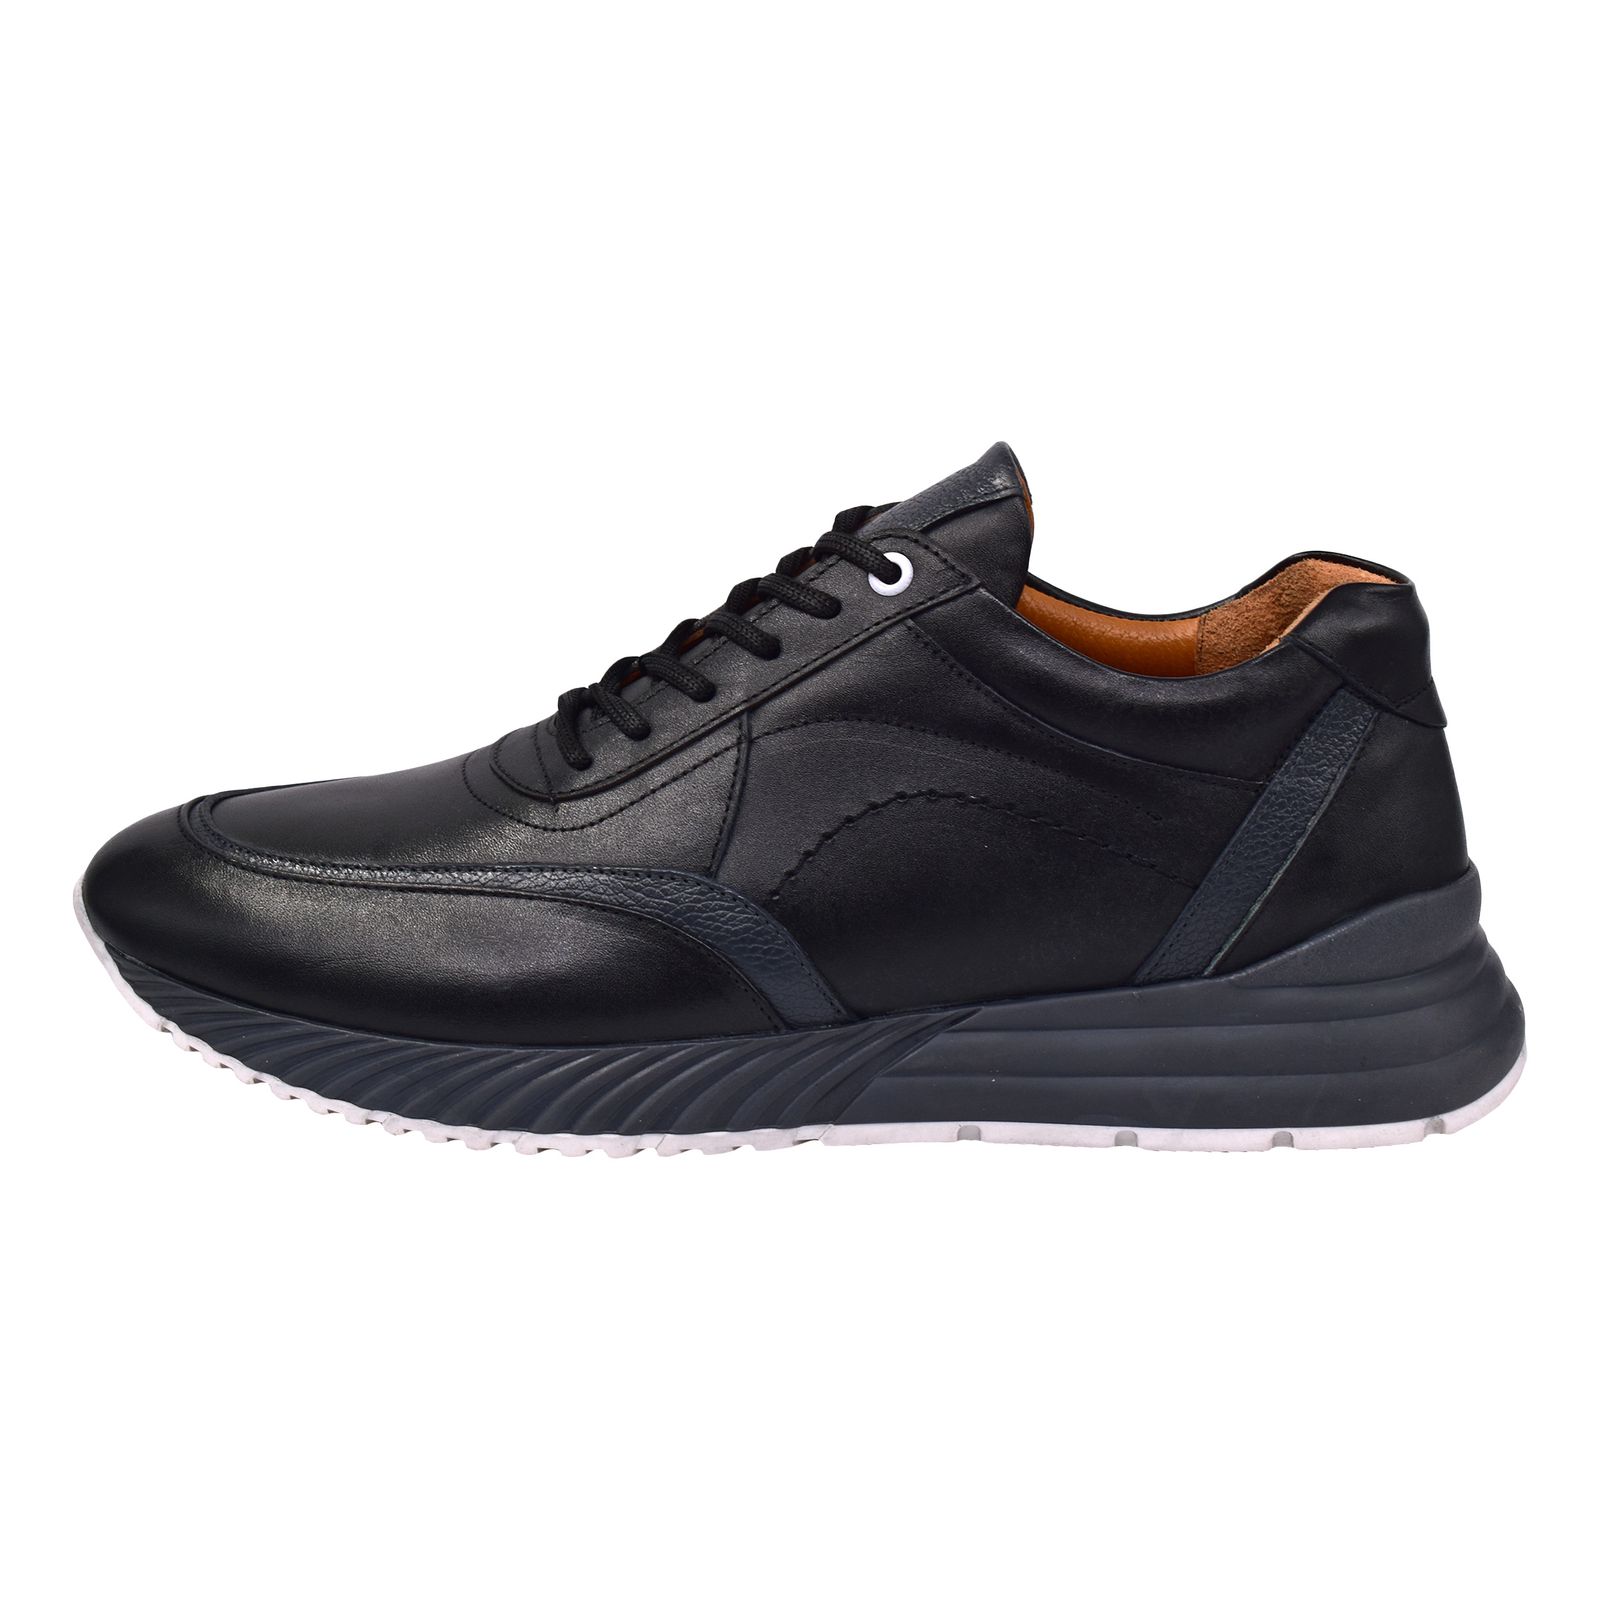 کفش روزمره مردانه پاما مدل ME-631 کد G1808 -  - 1